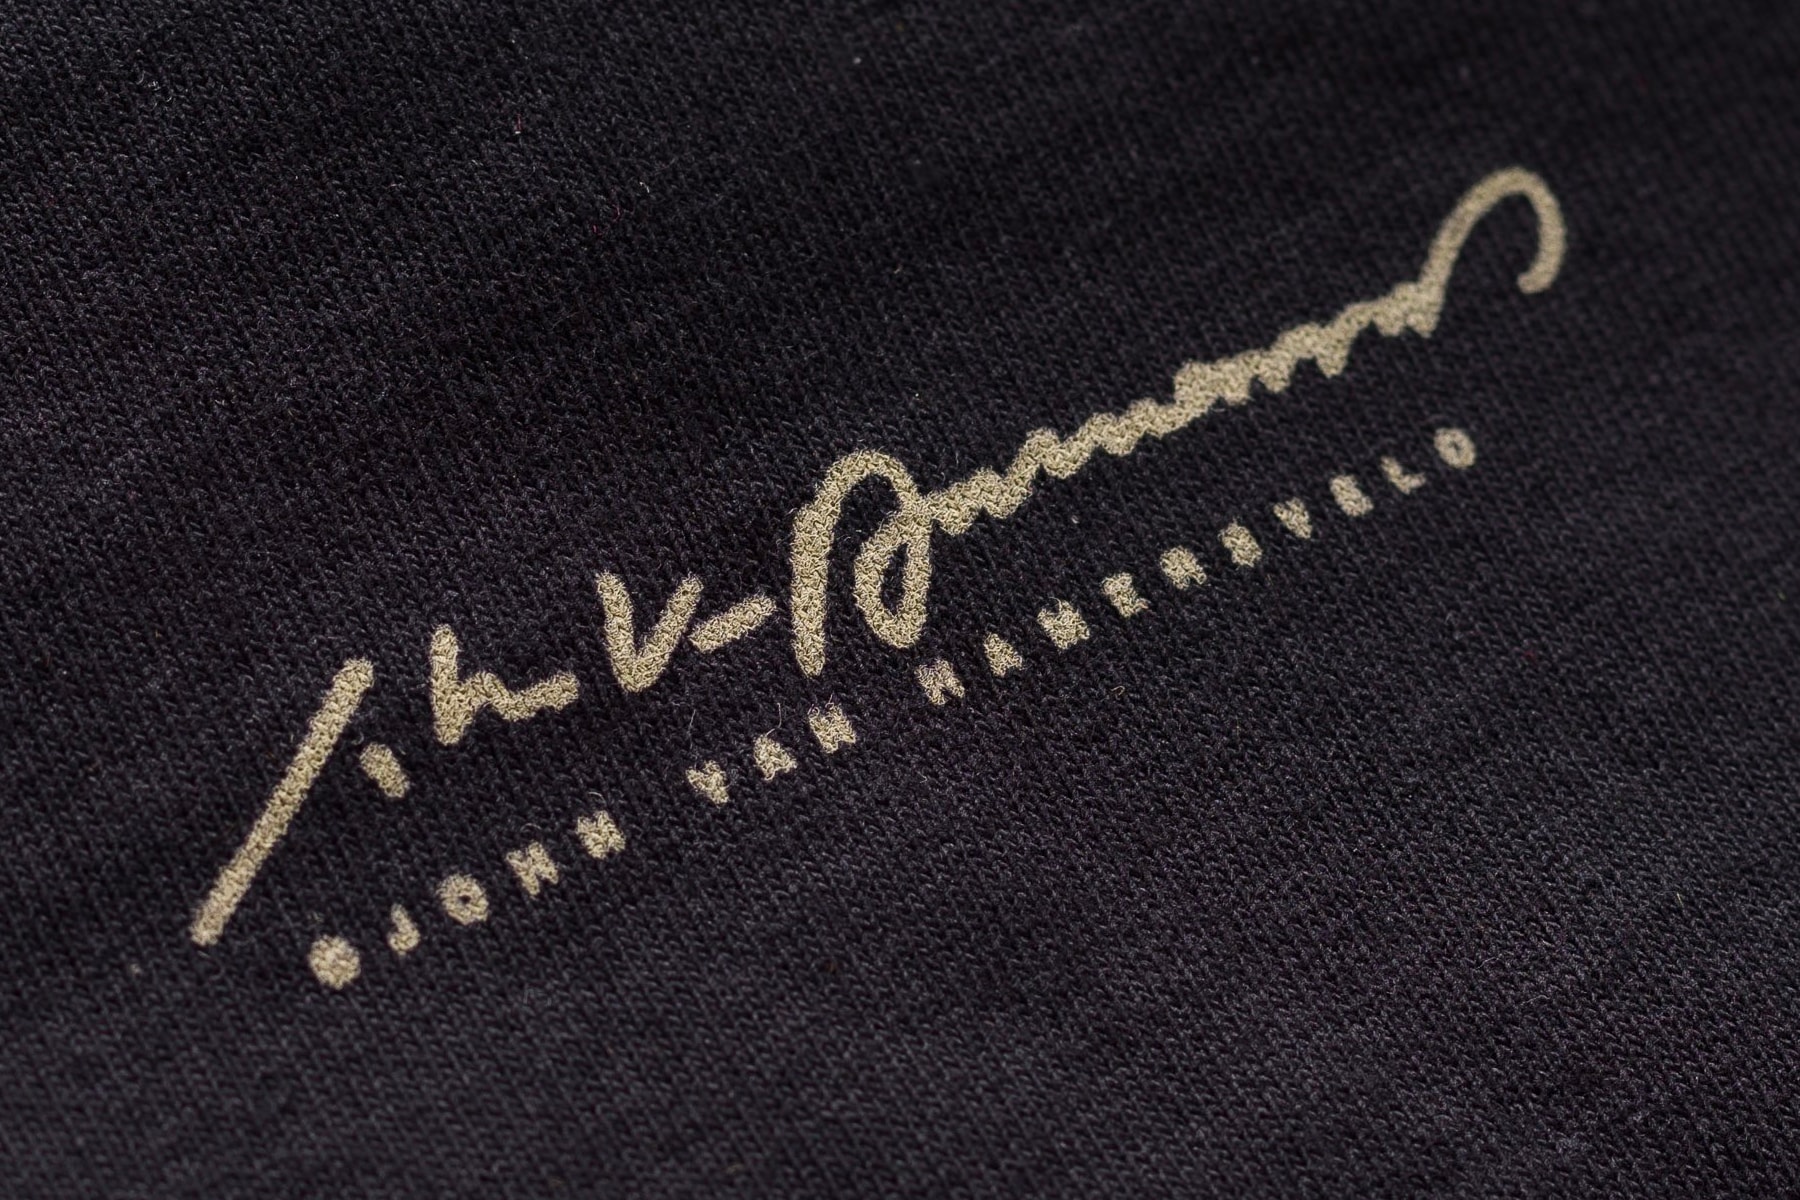 Vault by Vans John Van Hamersveld T-Shirts Johnny Face Thundercloud release info black